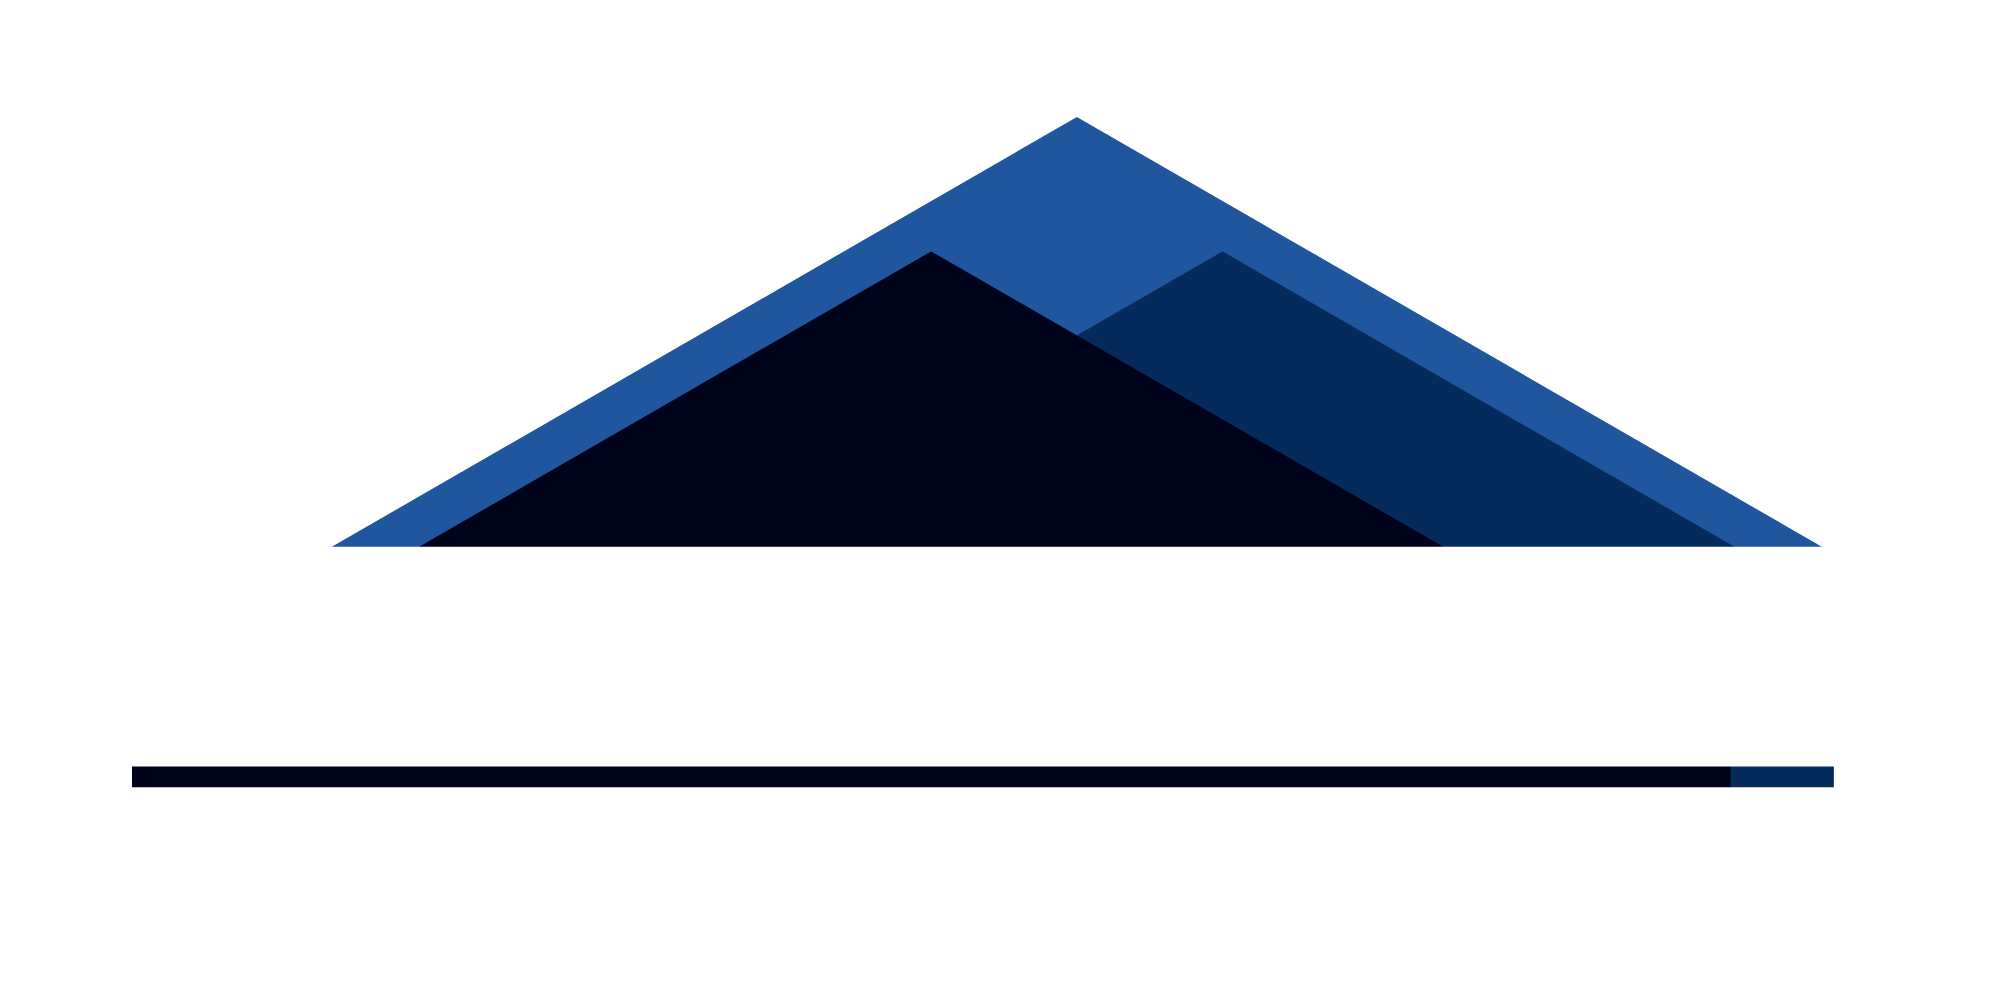 The Kittery Business Center